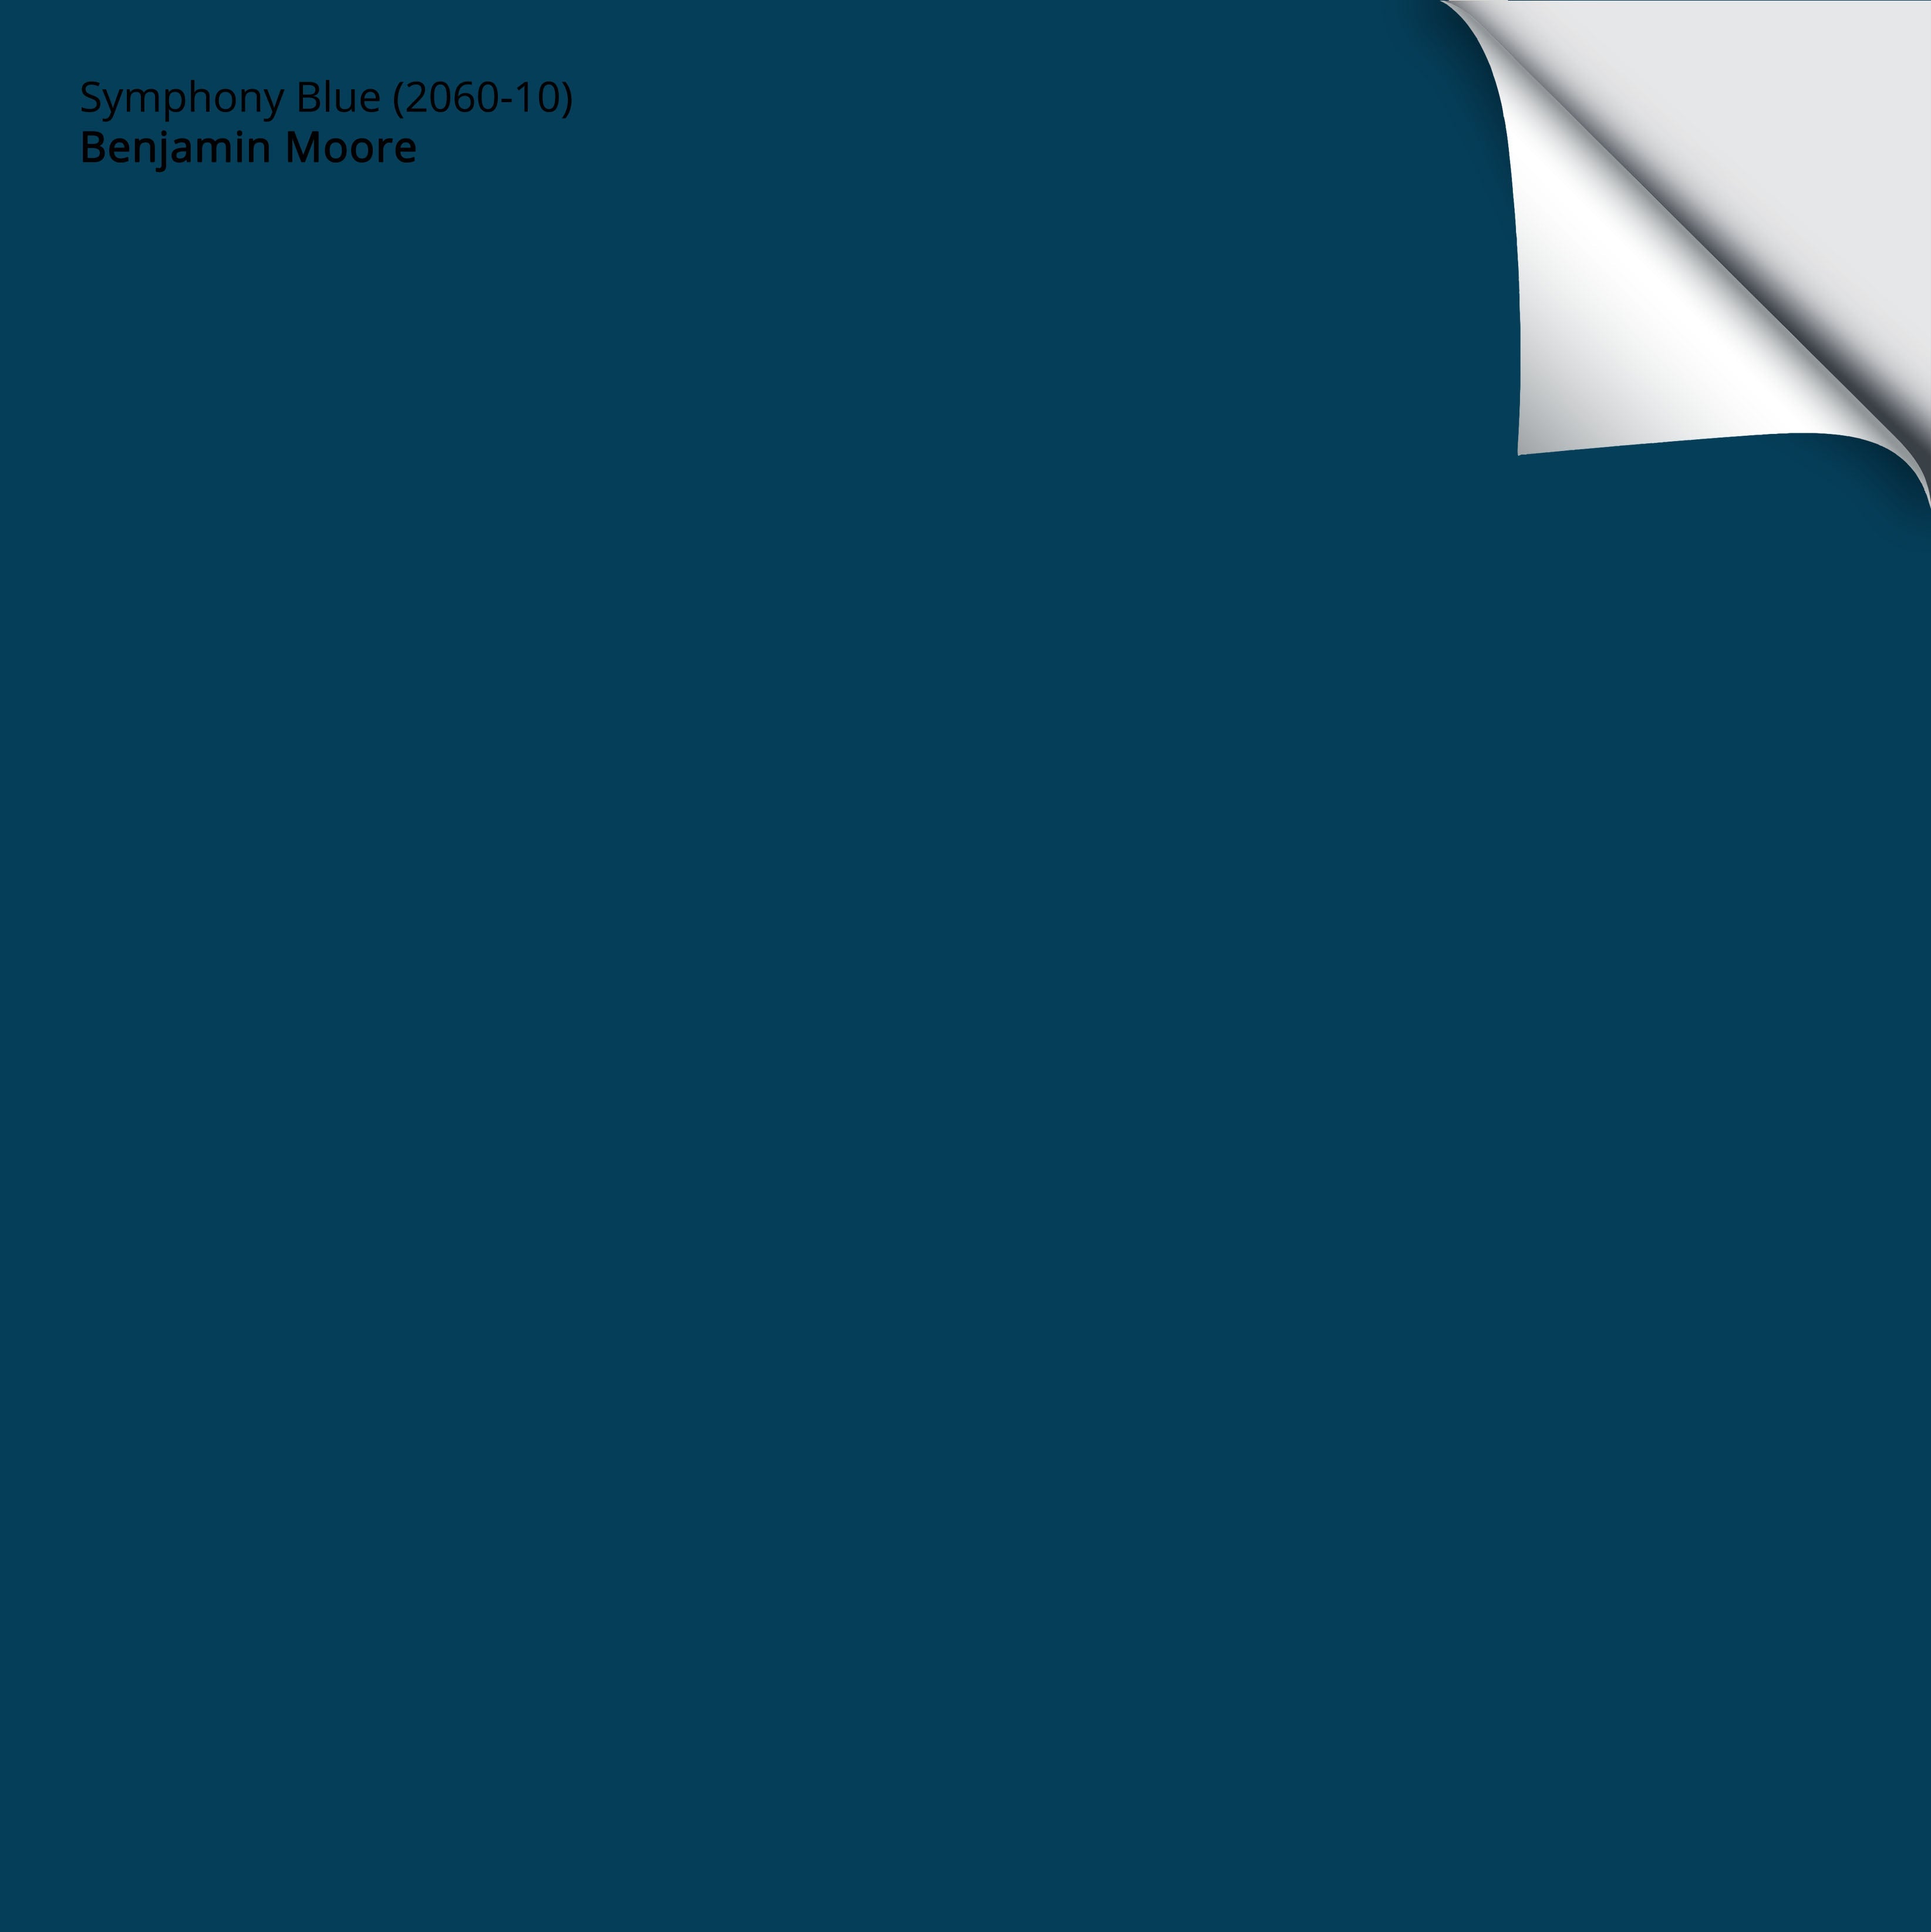 Benjamin Moore - Symphony Blue 2060-10 Colour Sample